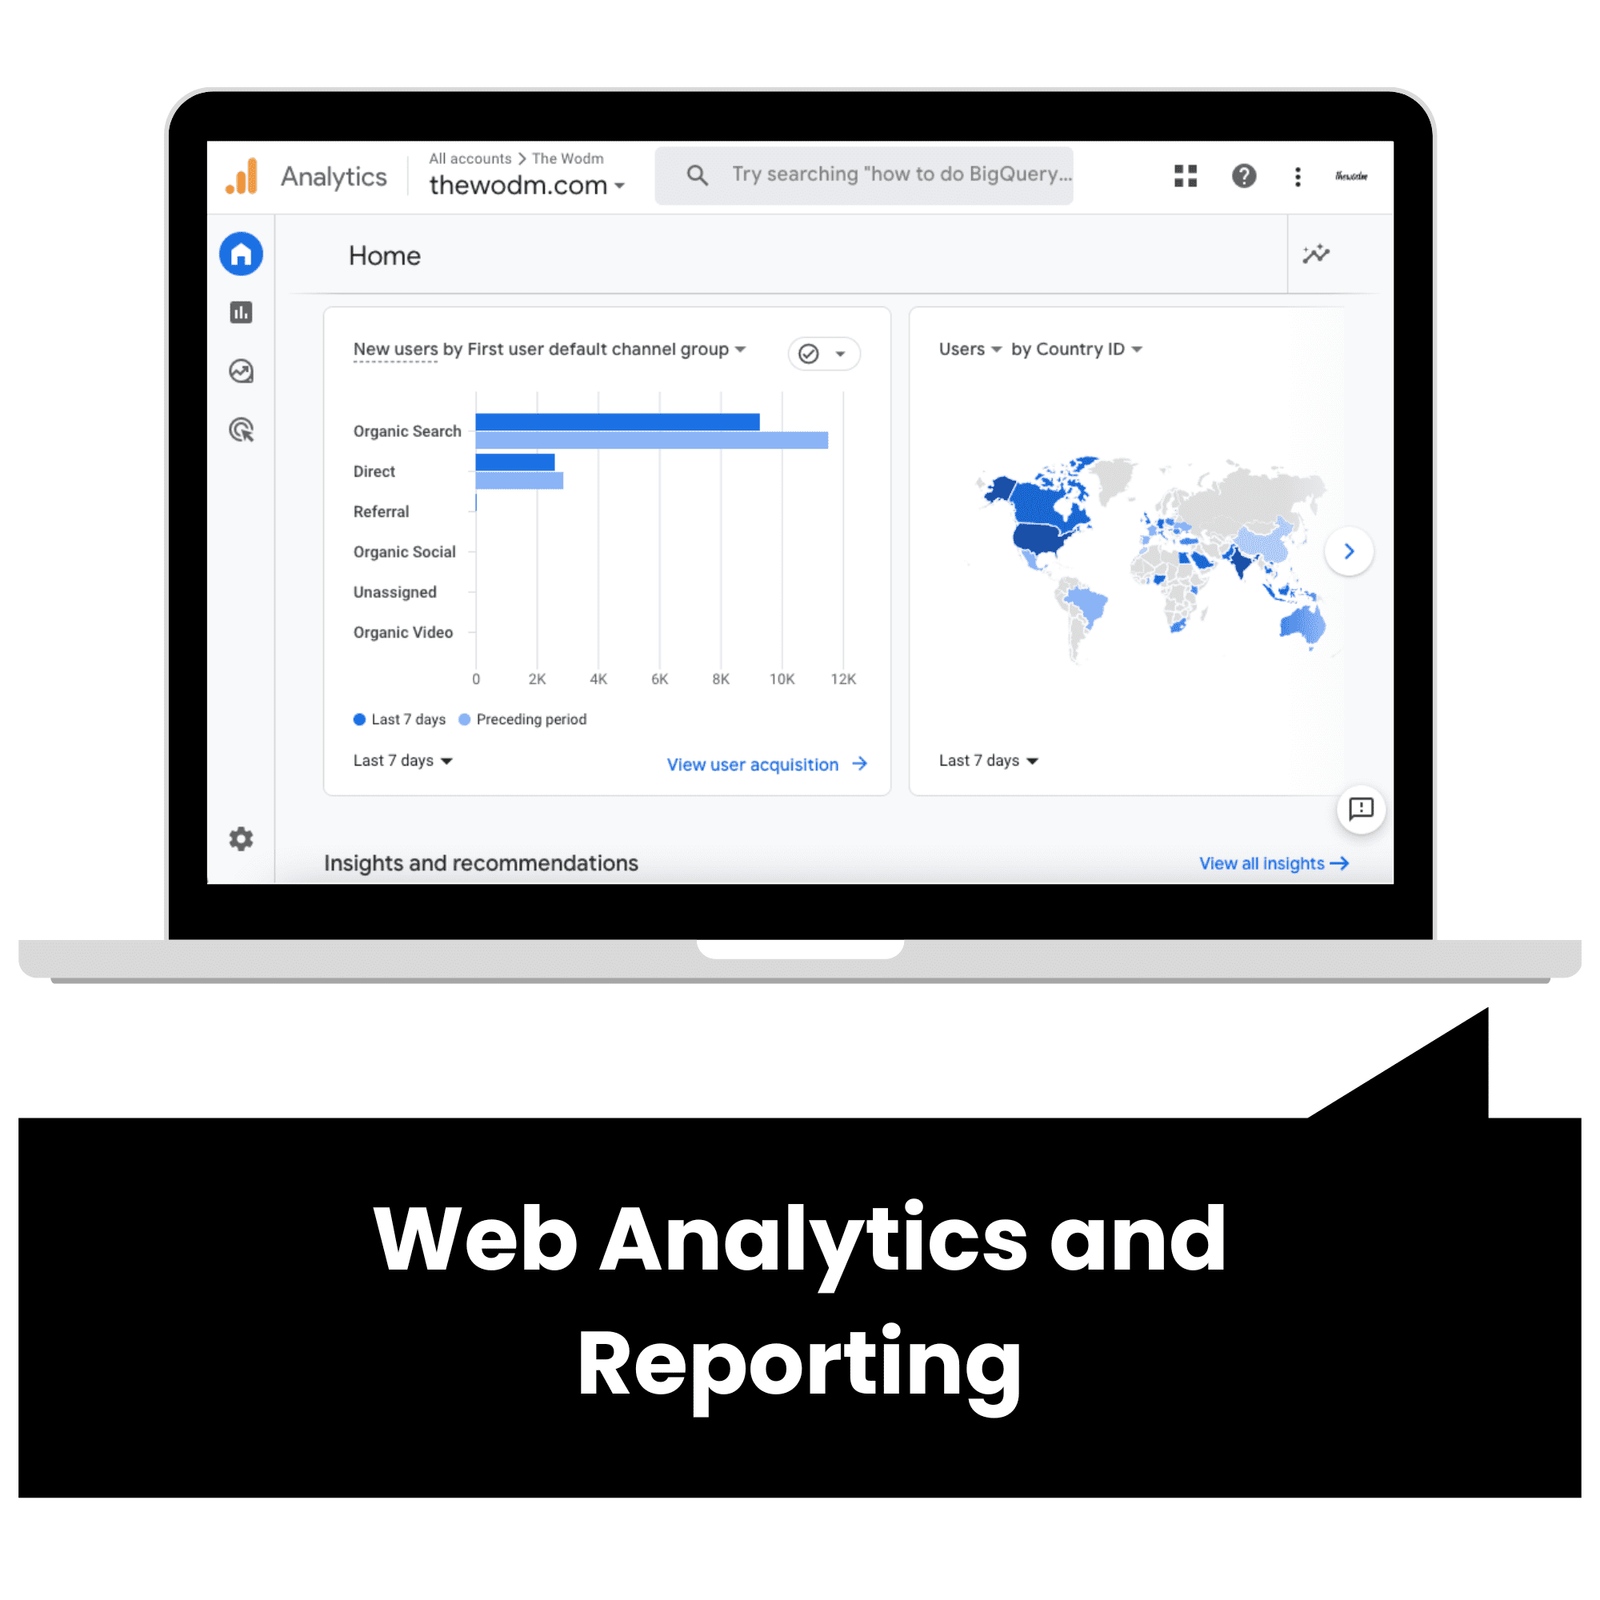 Web Analytics and Reporting